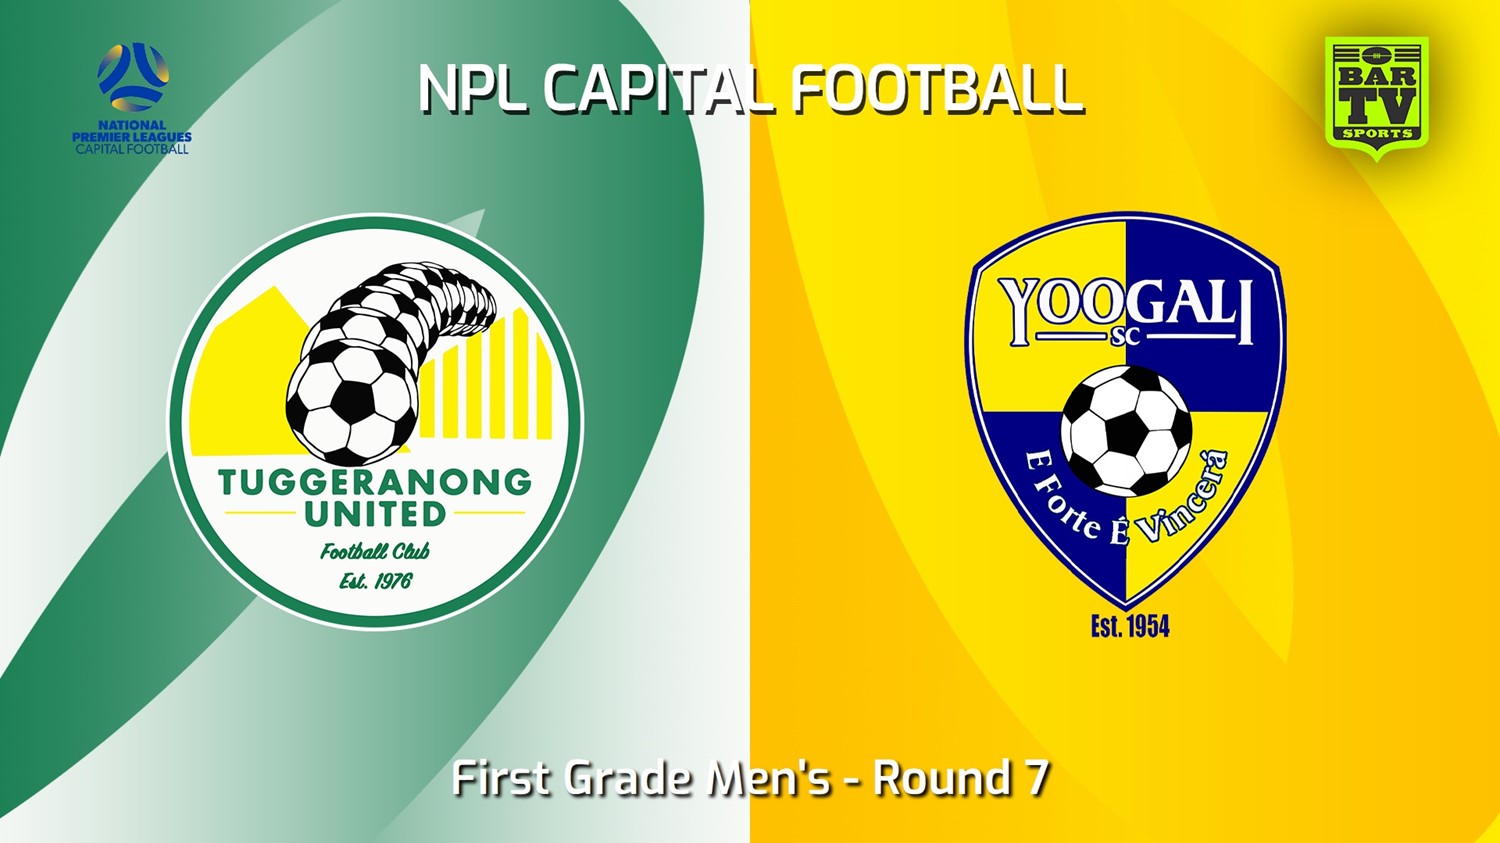 240519-video-Capital NPL Round 7 - Tuggeranong United v Yoogali SC Minigame Slate Image